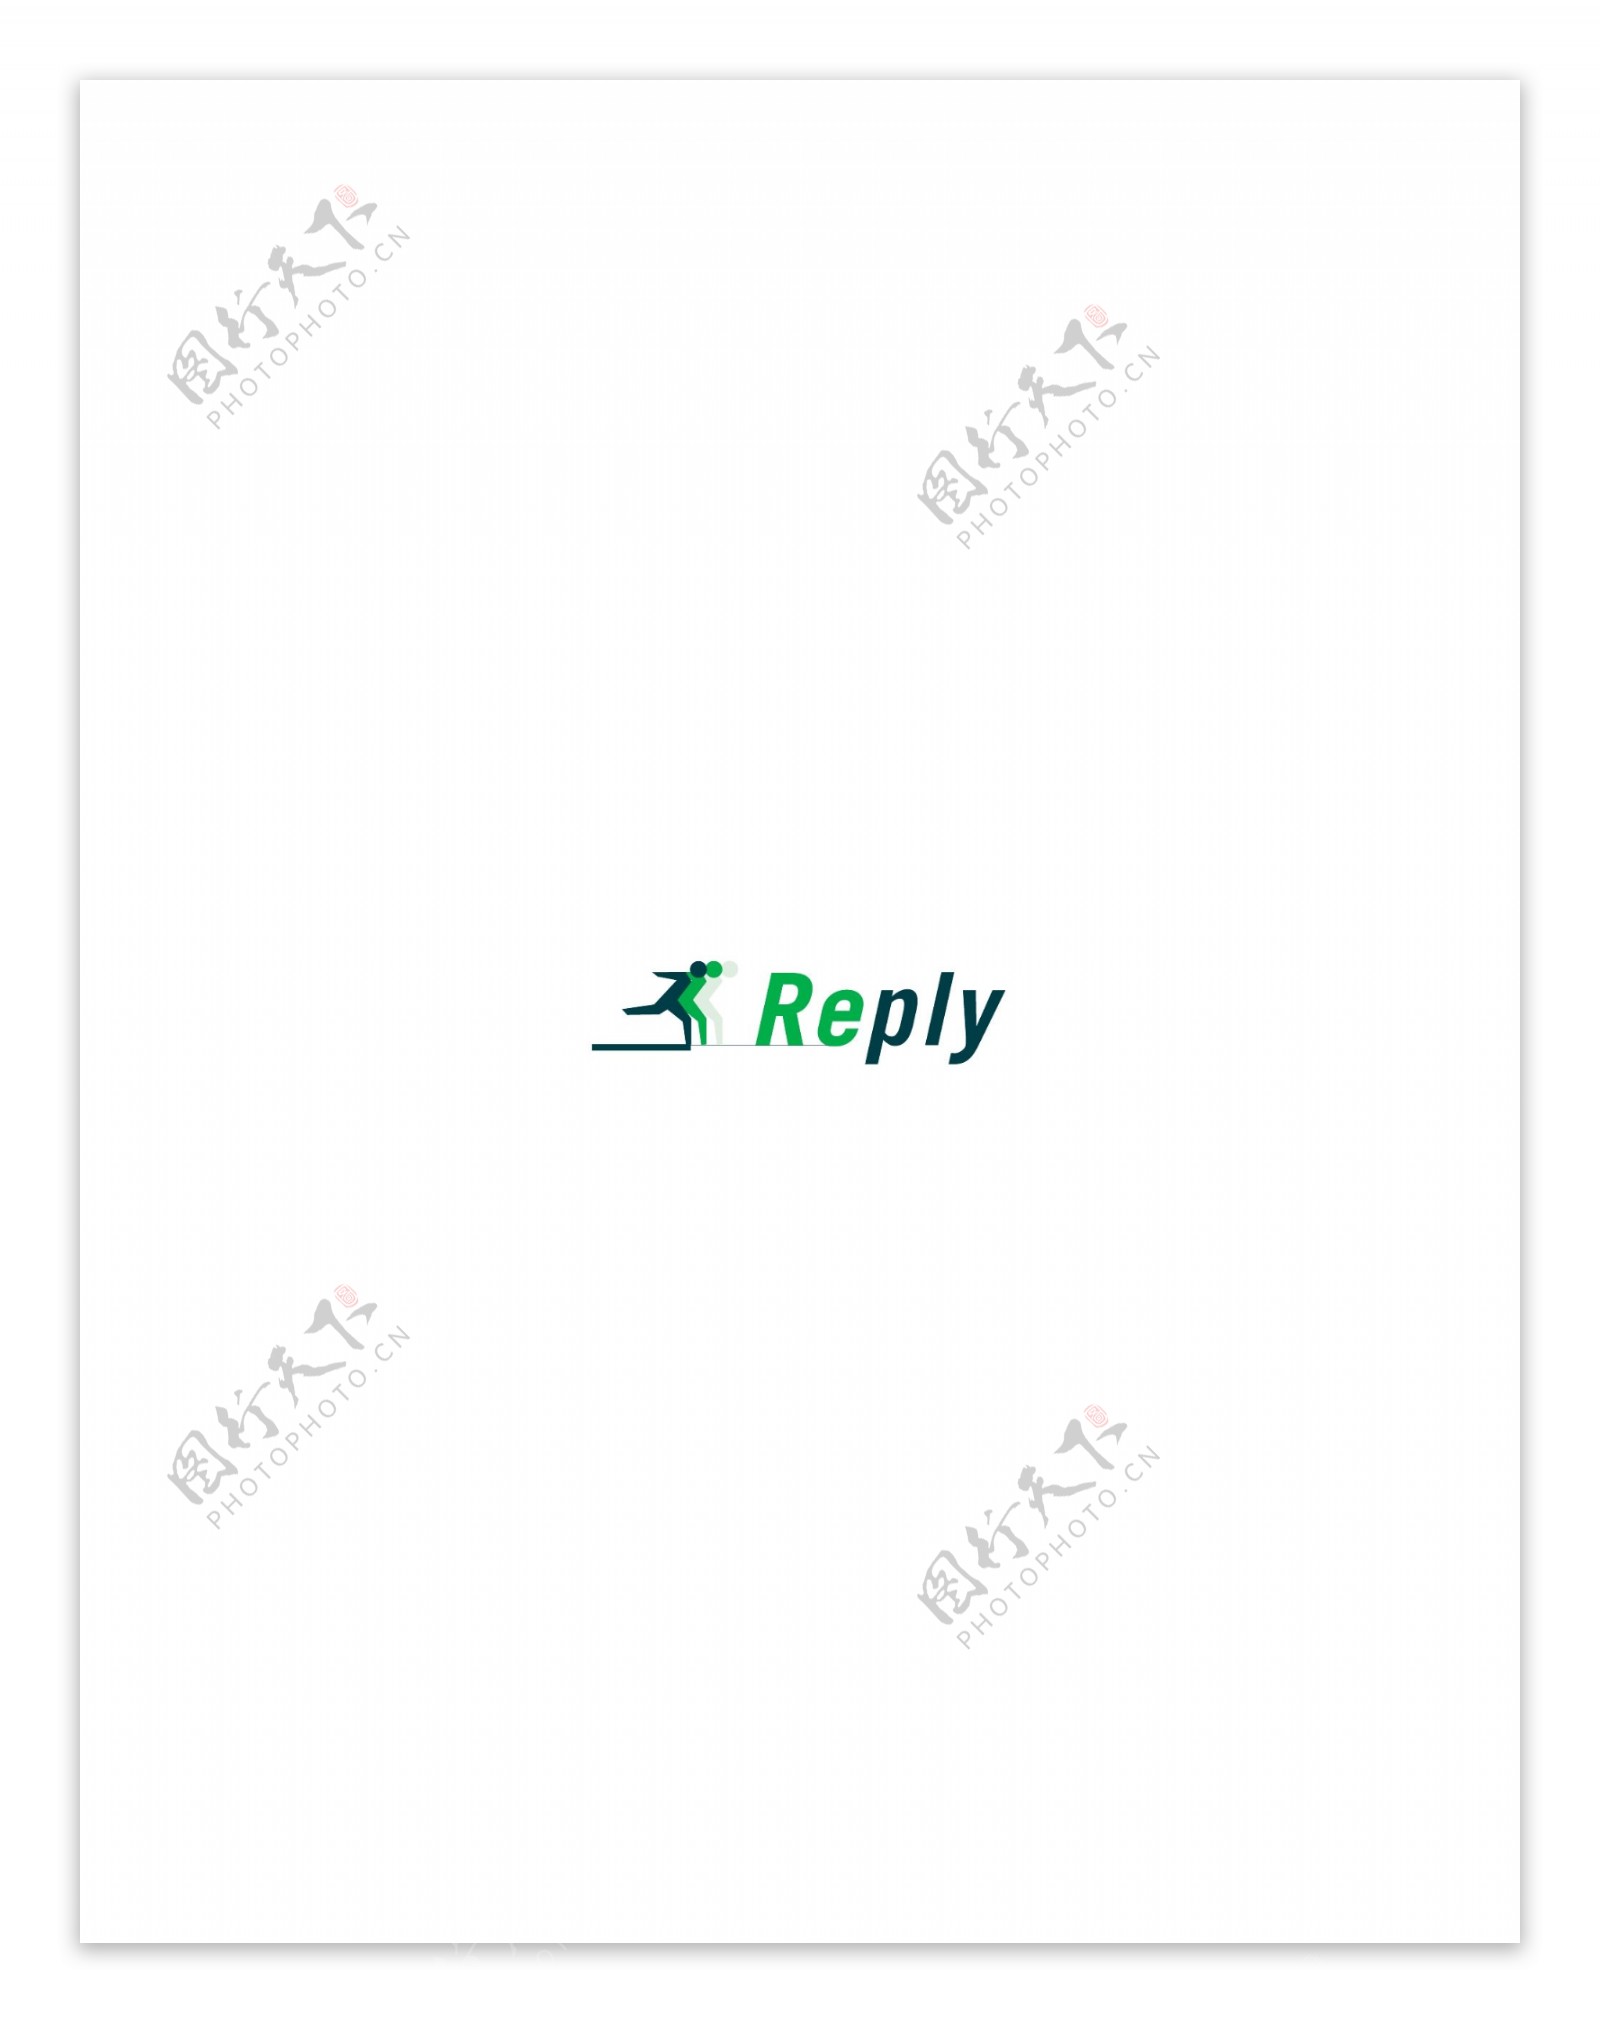 Replyspalogo设计欣赏Replyspa网络公司标志下载标志设计欣赏